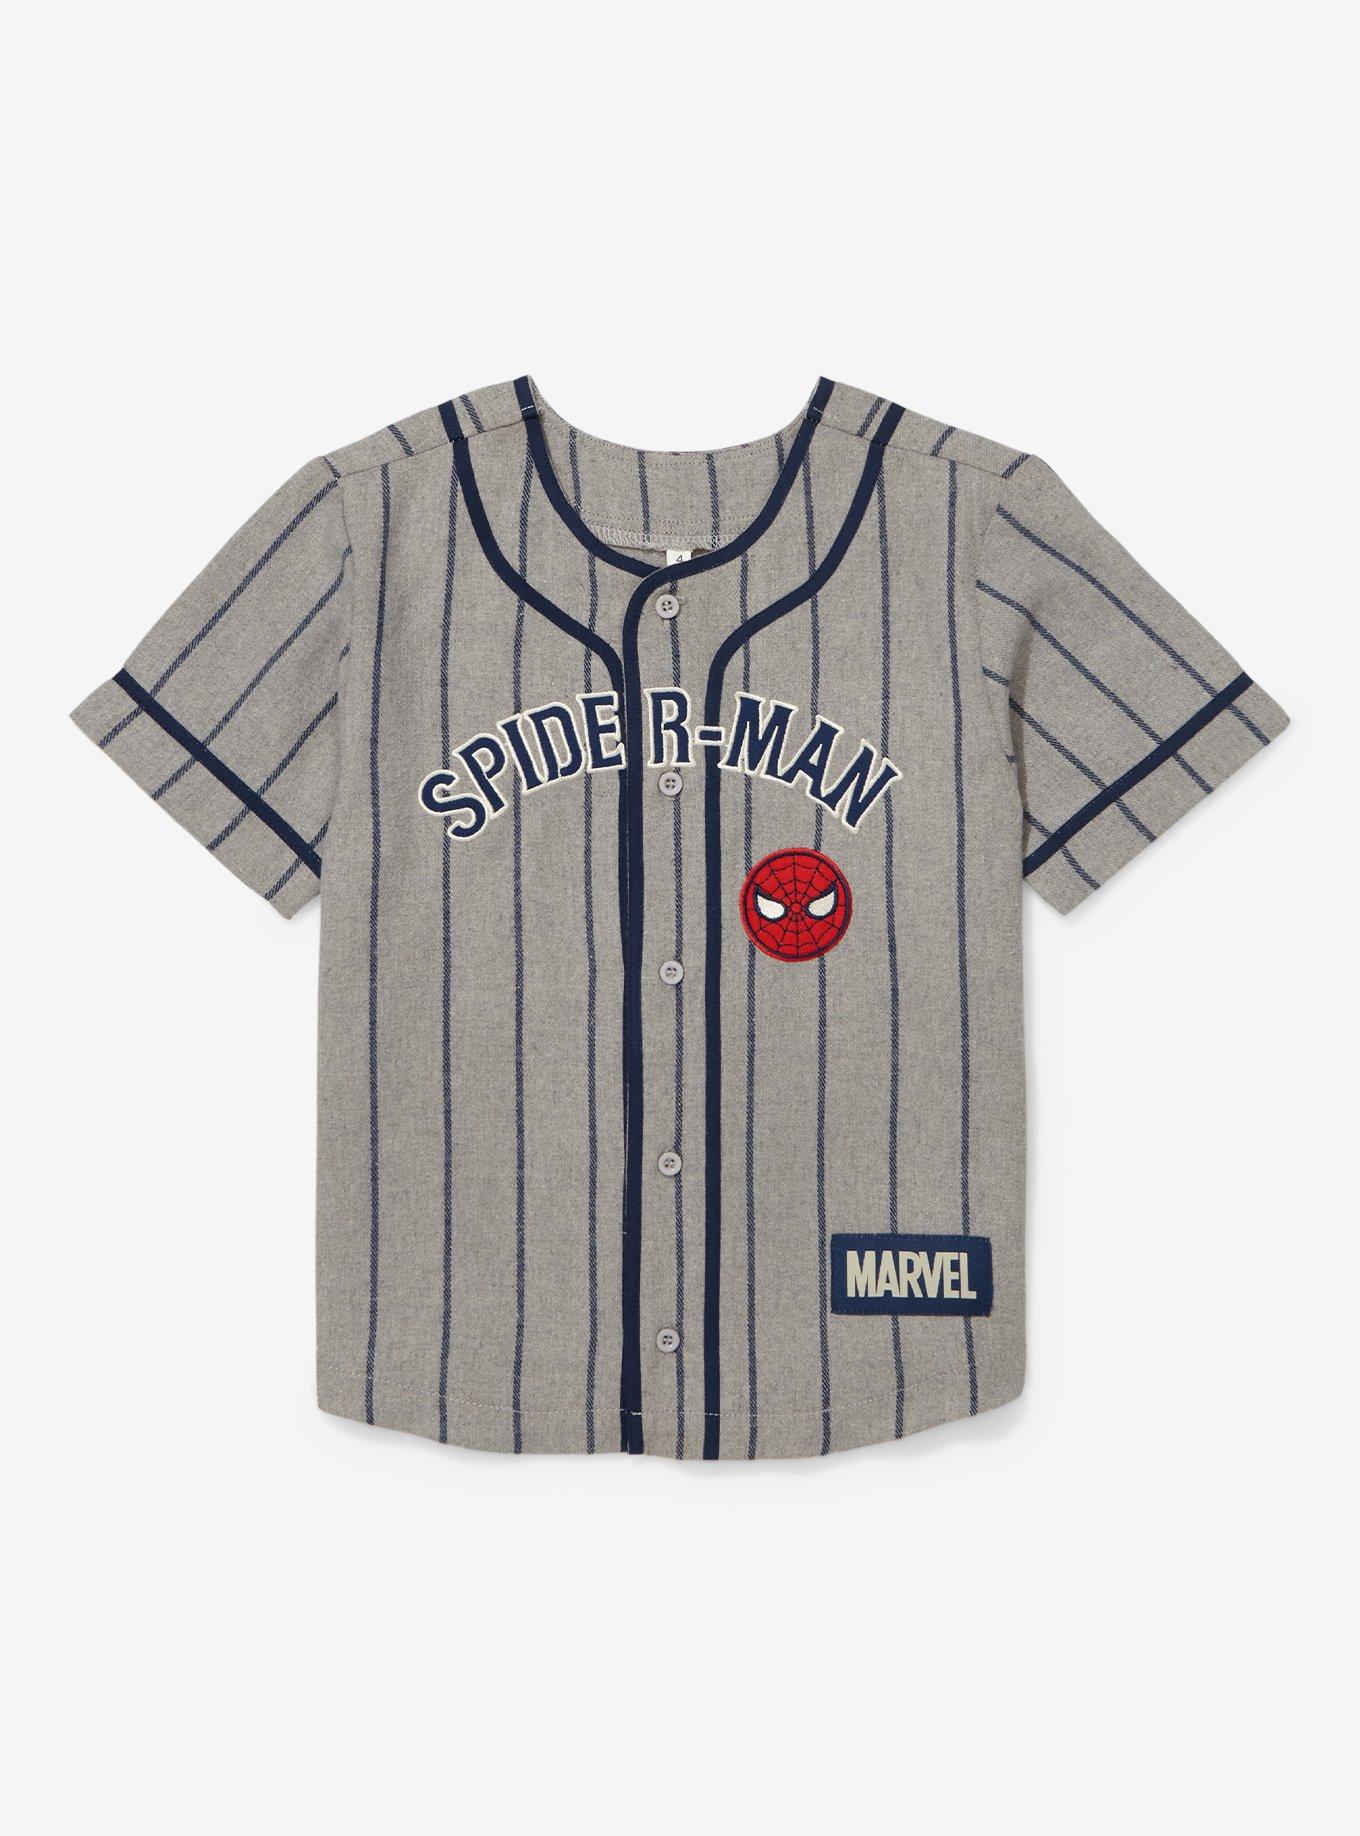 Marvel Spider-Man Spidey Toddler Basketball Jersey - BoxLunch Exclusive